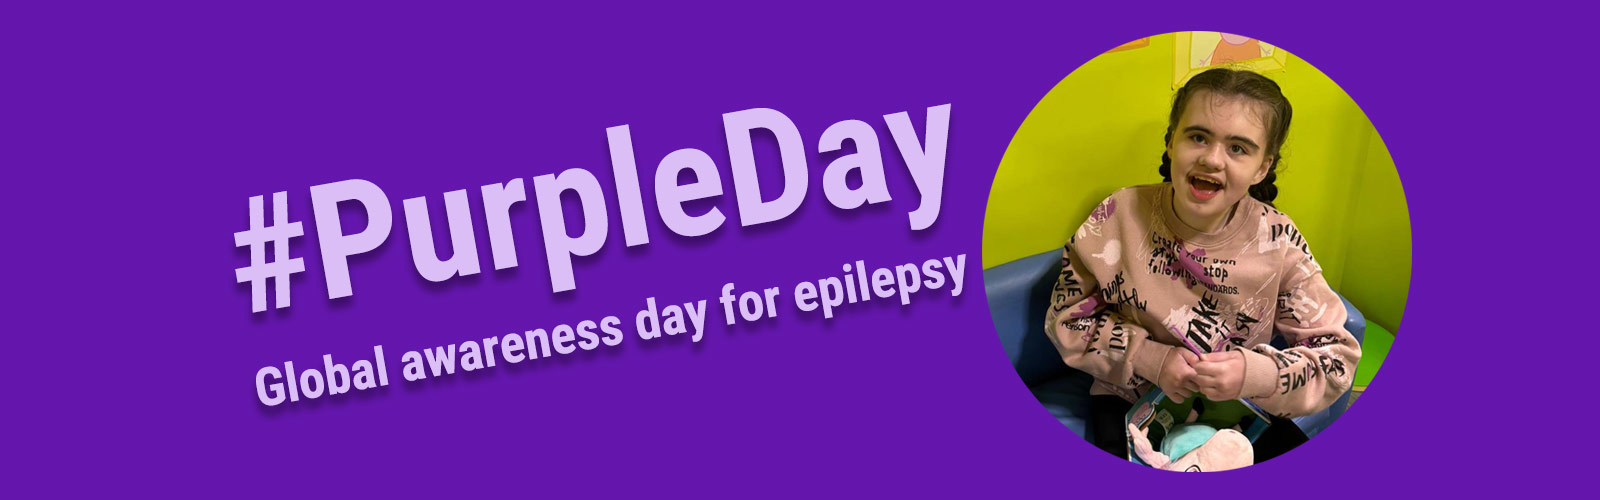 World Purple Day banner - global awareness for epilepsy